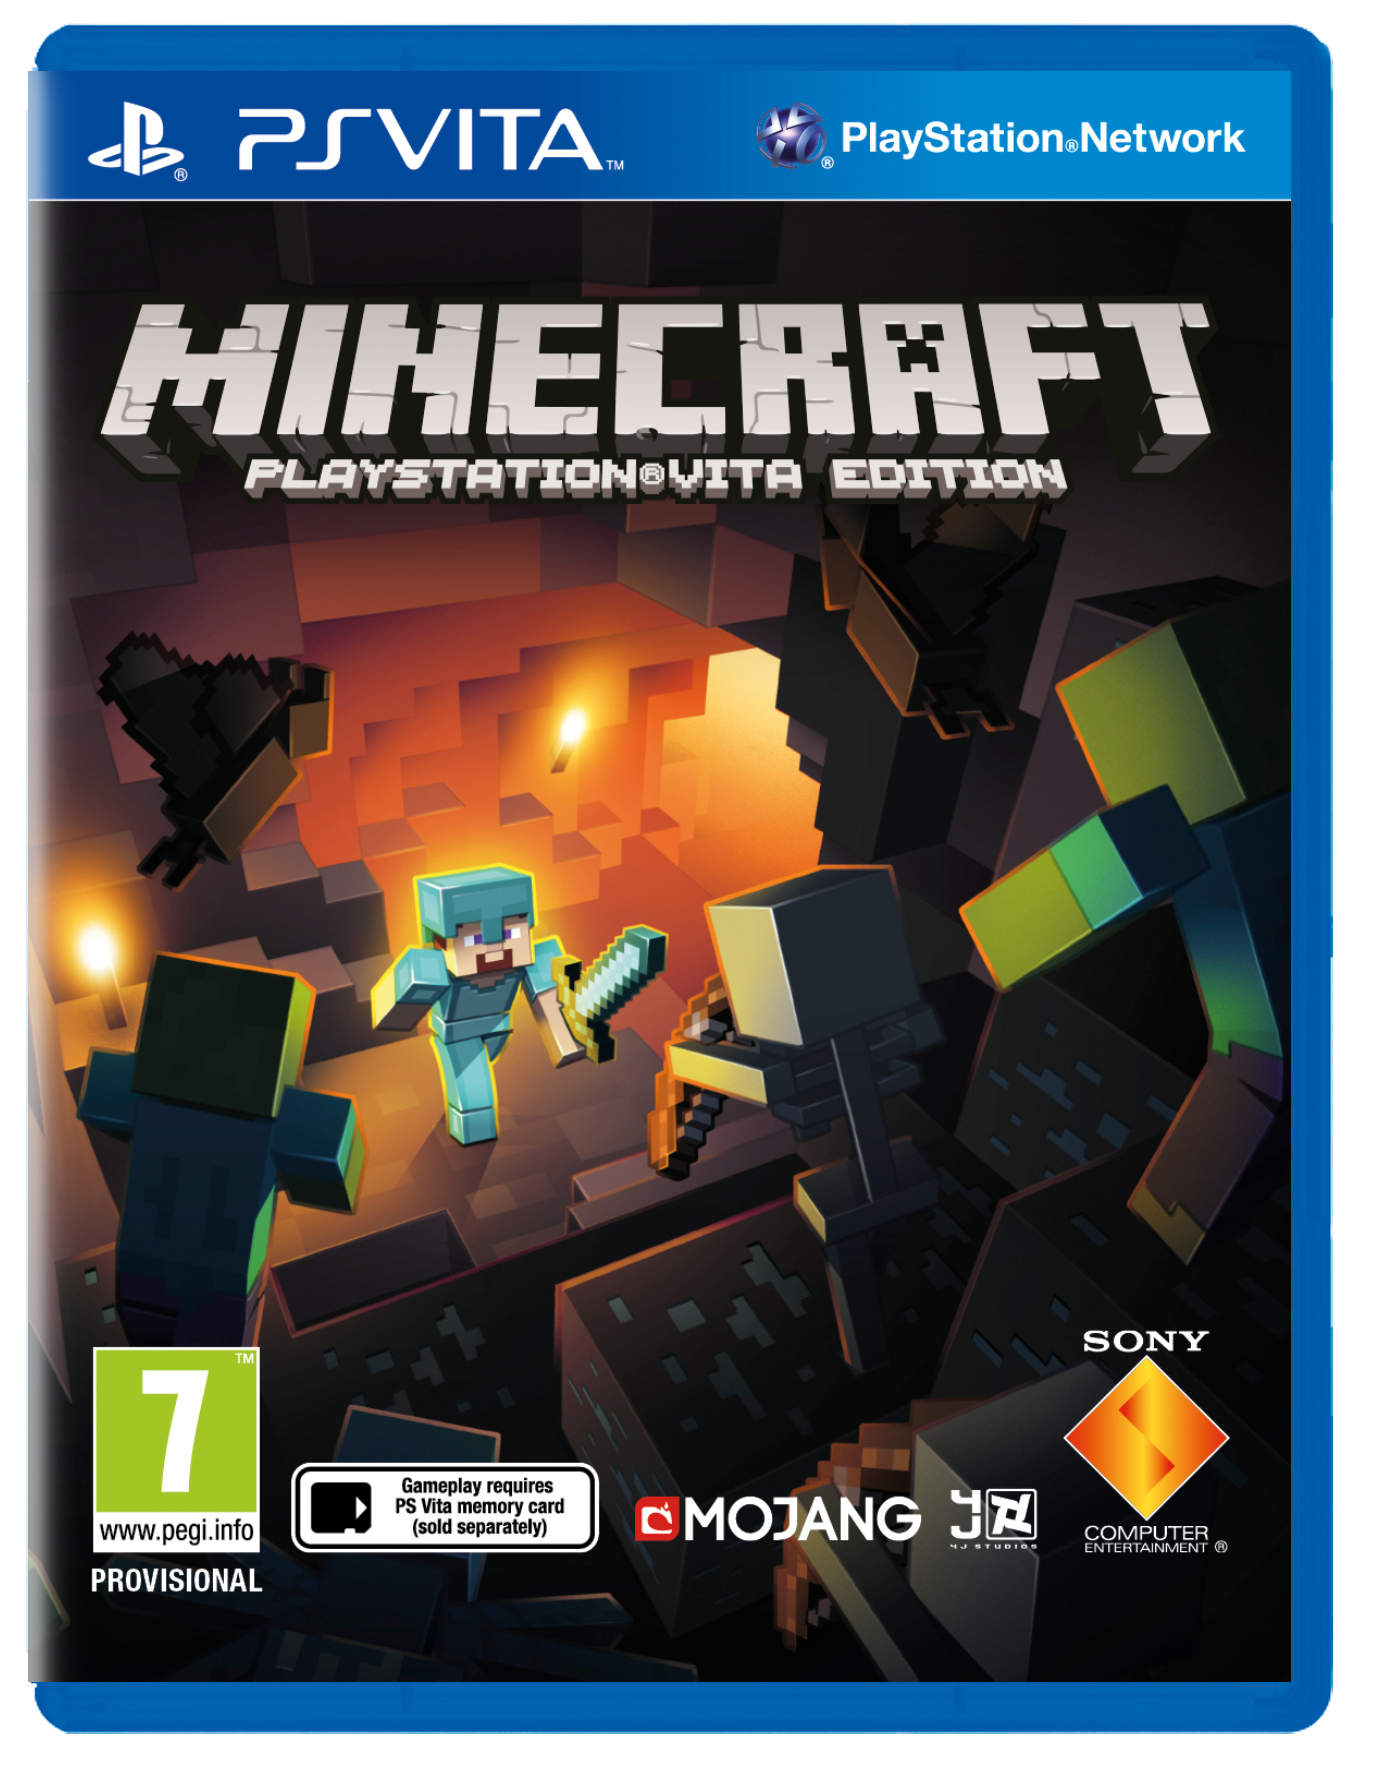 Minecraft PSVita_2D Pack_PEGI